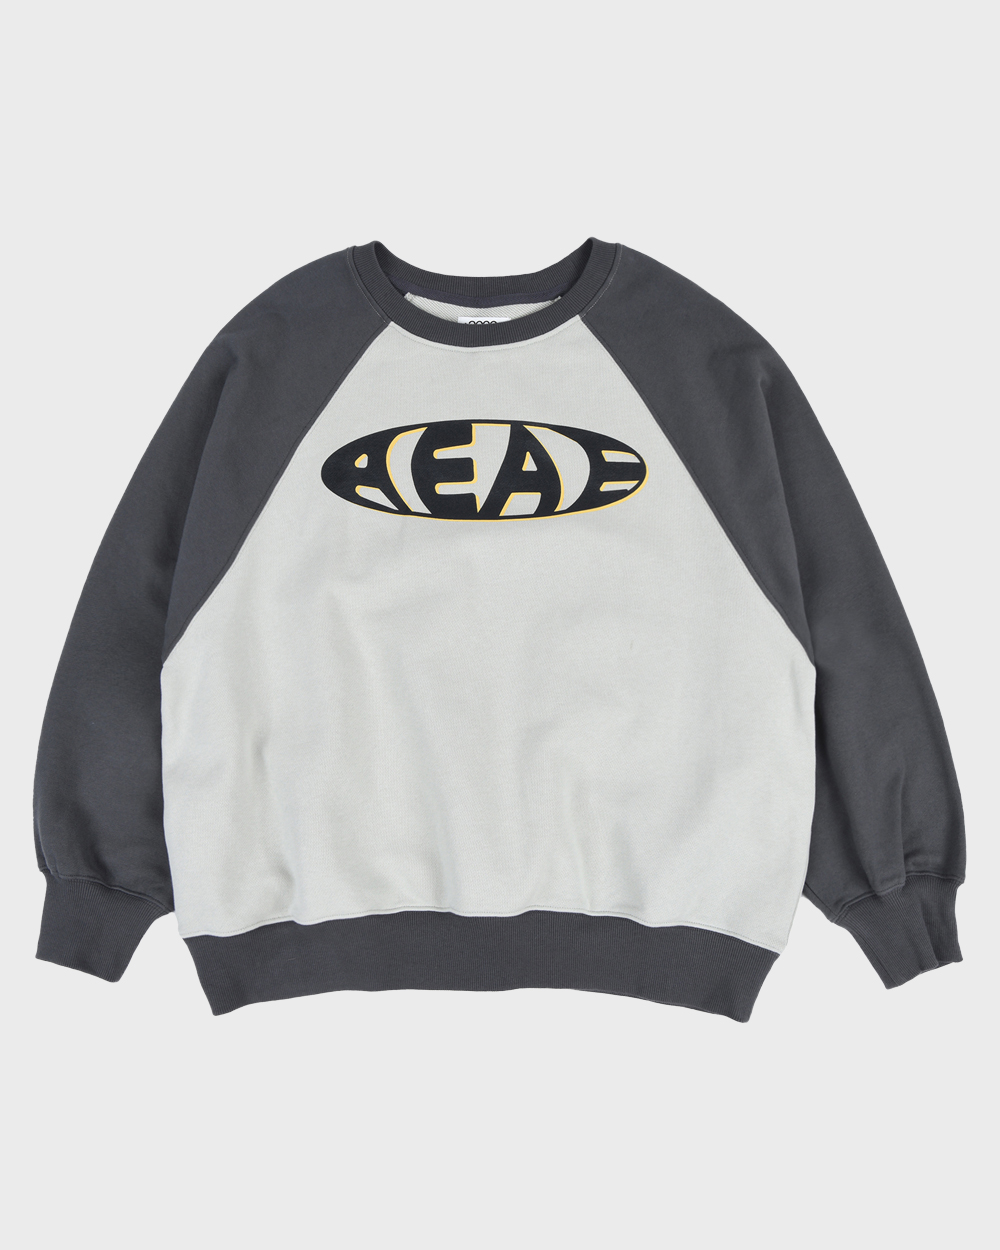 aeae Vintage Logo Raglan Sweatshirts (Charcoal/Green)